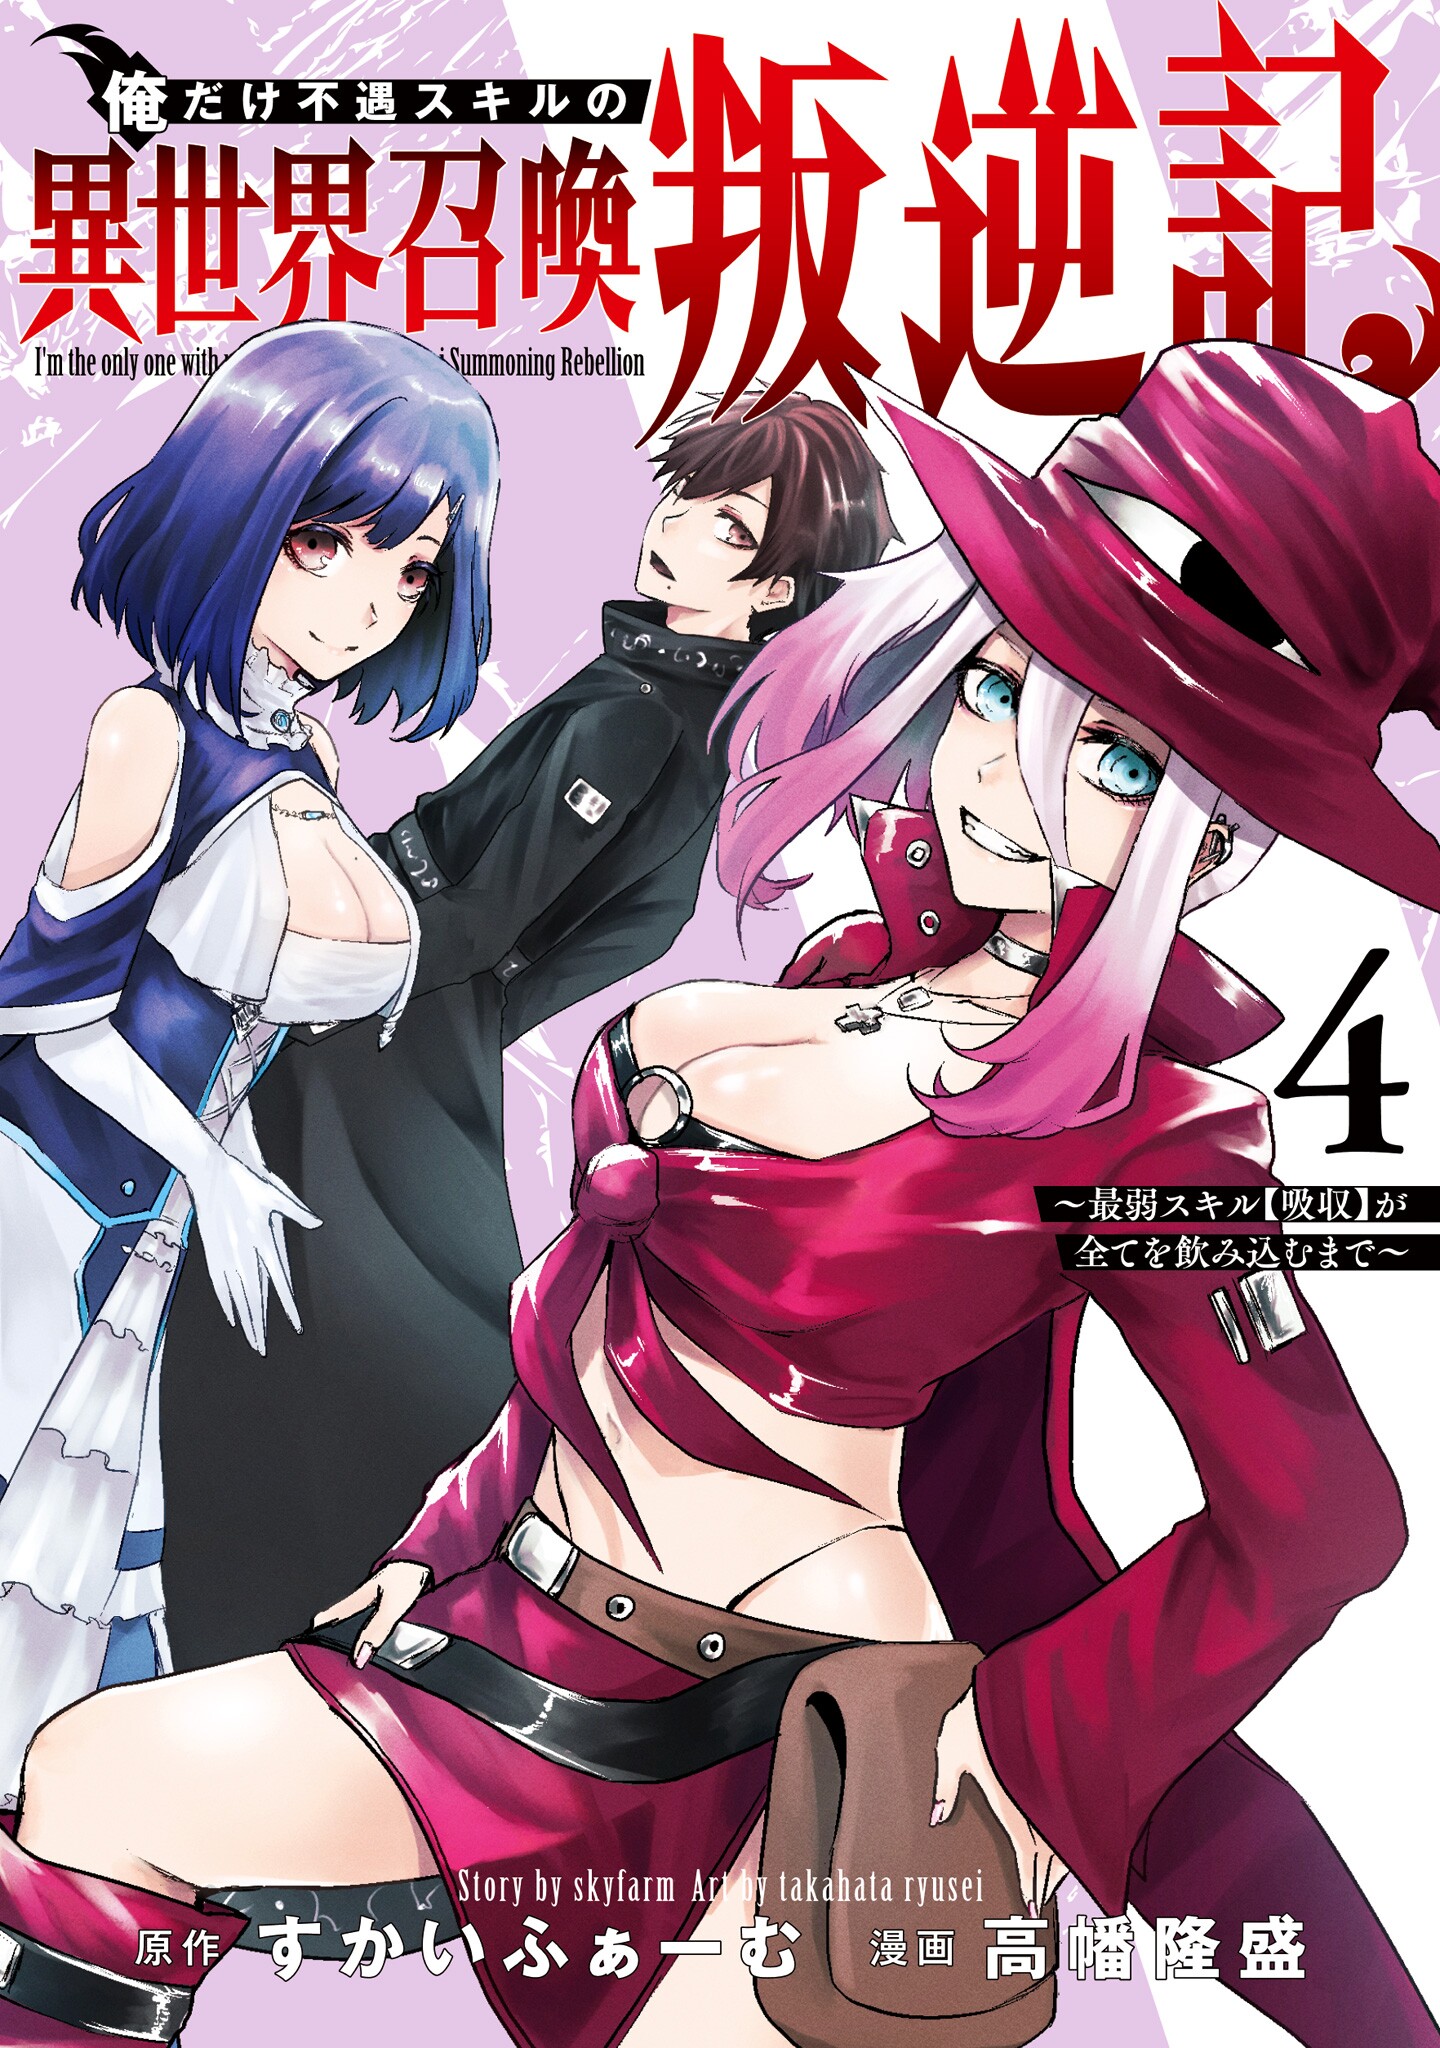 Free Reading Rolling Combat!: Ochikobore Jieikan, Isekai no Chuushin de  Fujun na Ai wo Sakebu Manga On WebComics